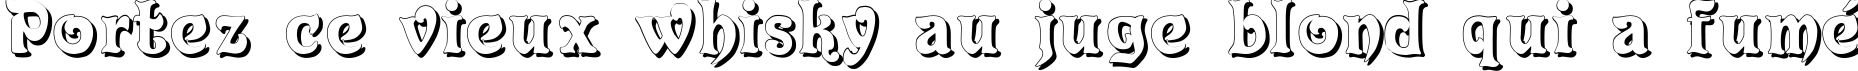 Пример написания шрифтом Roland Shadow текста на французском